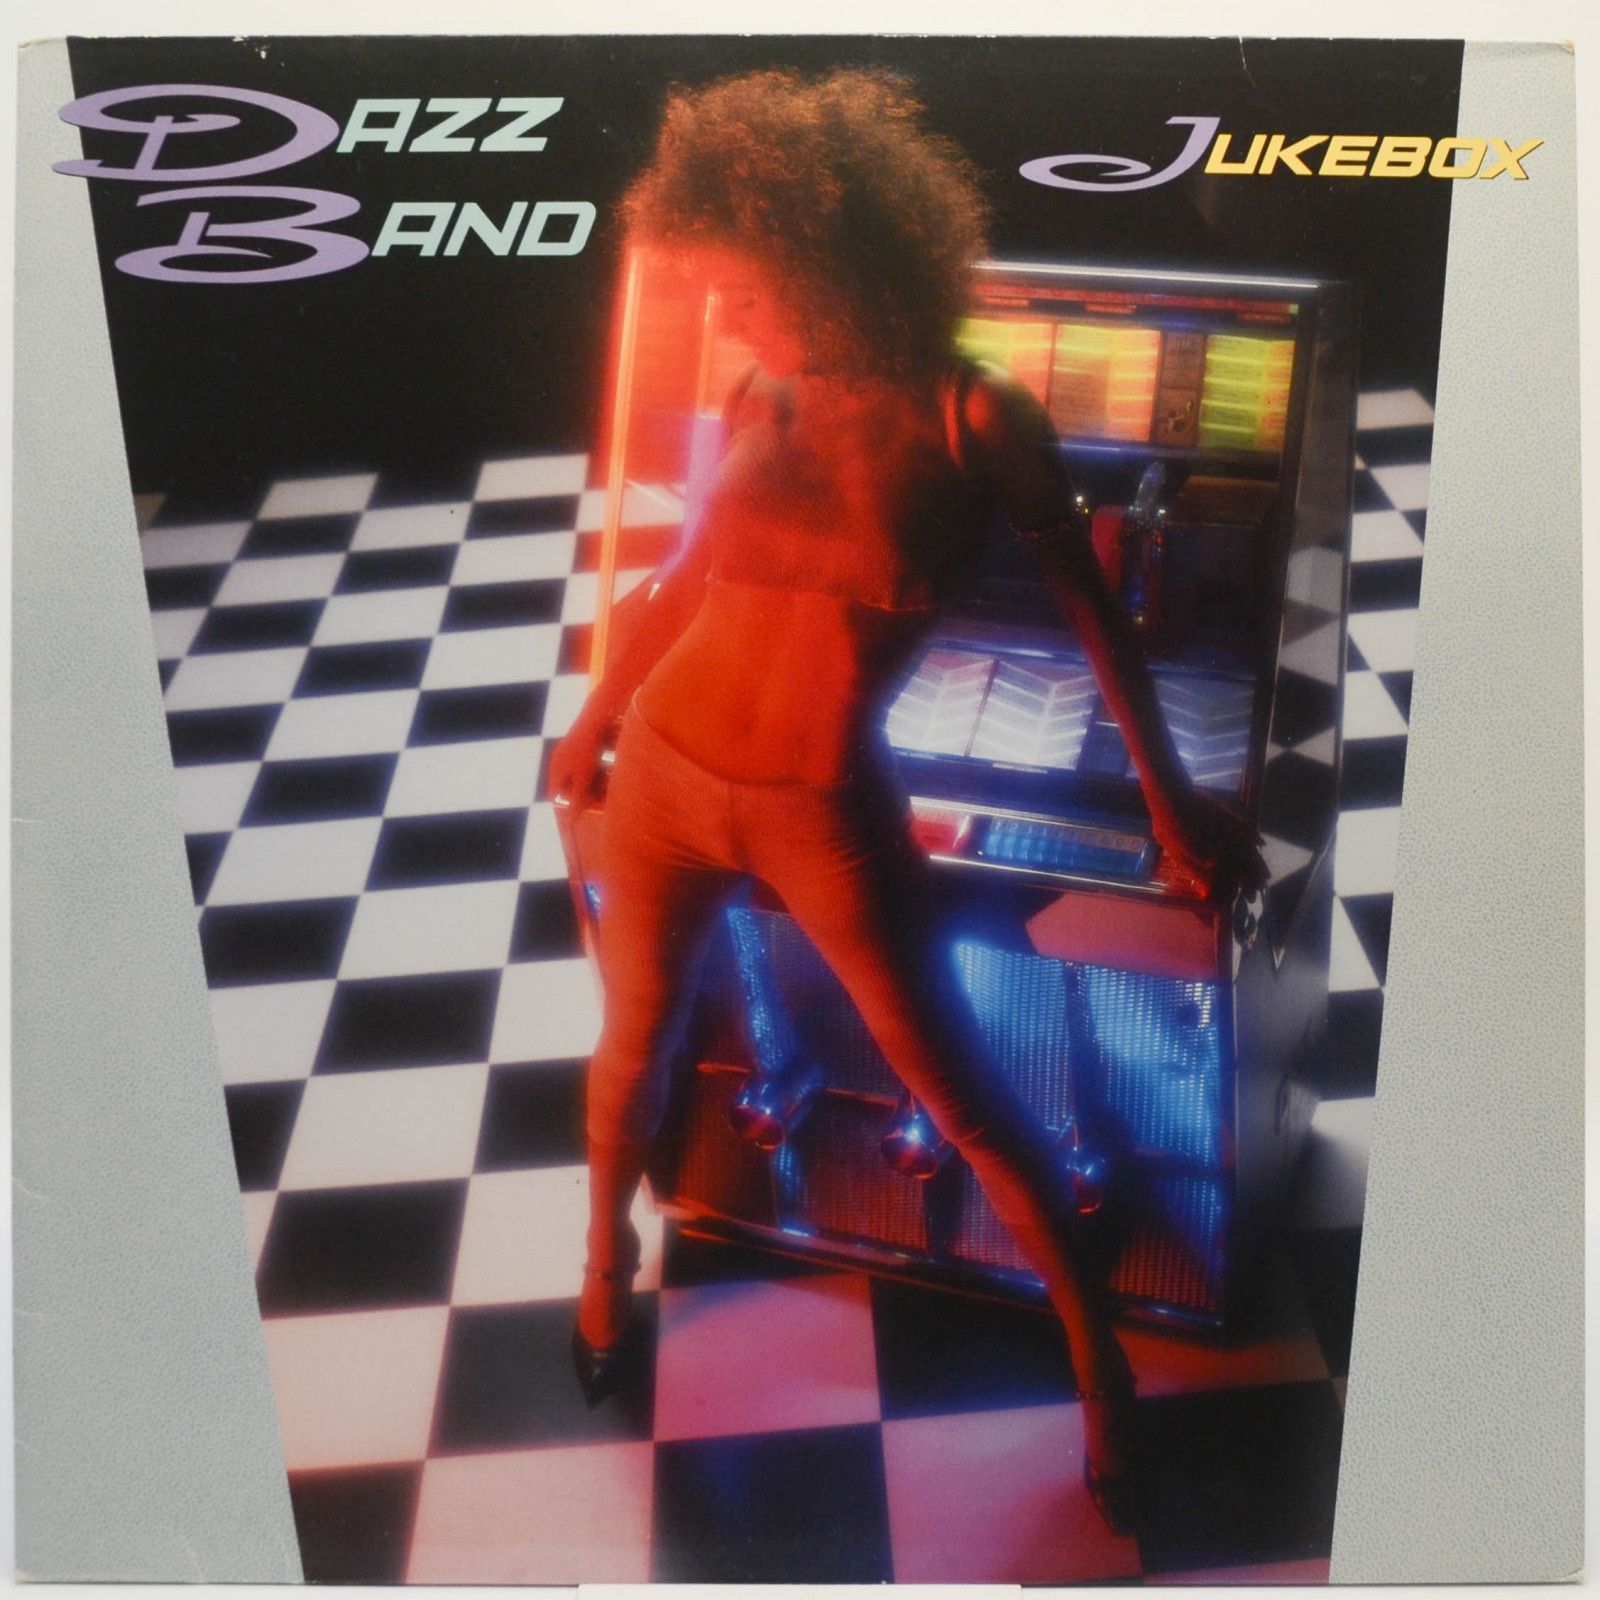 Dazz Band — Jukebox, 1984